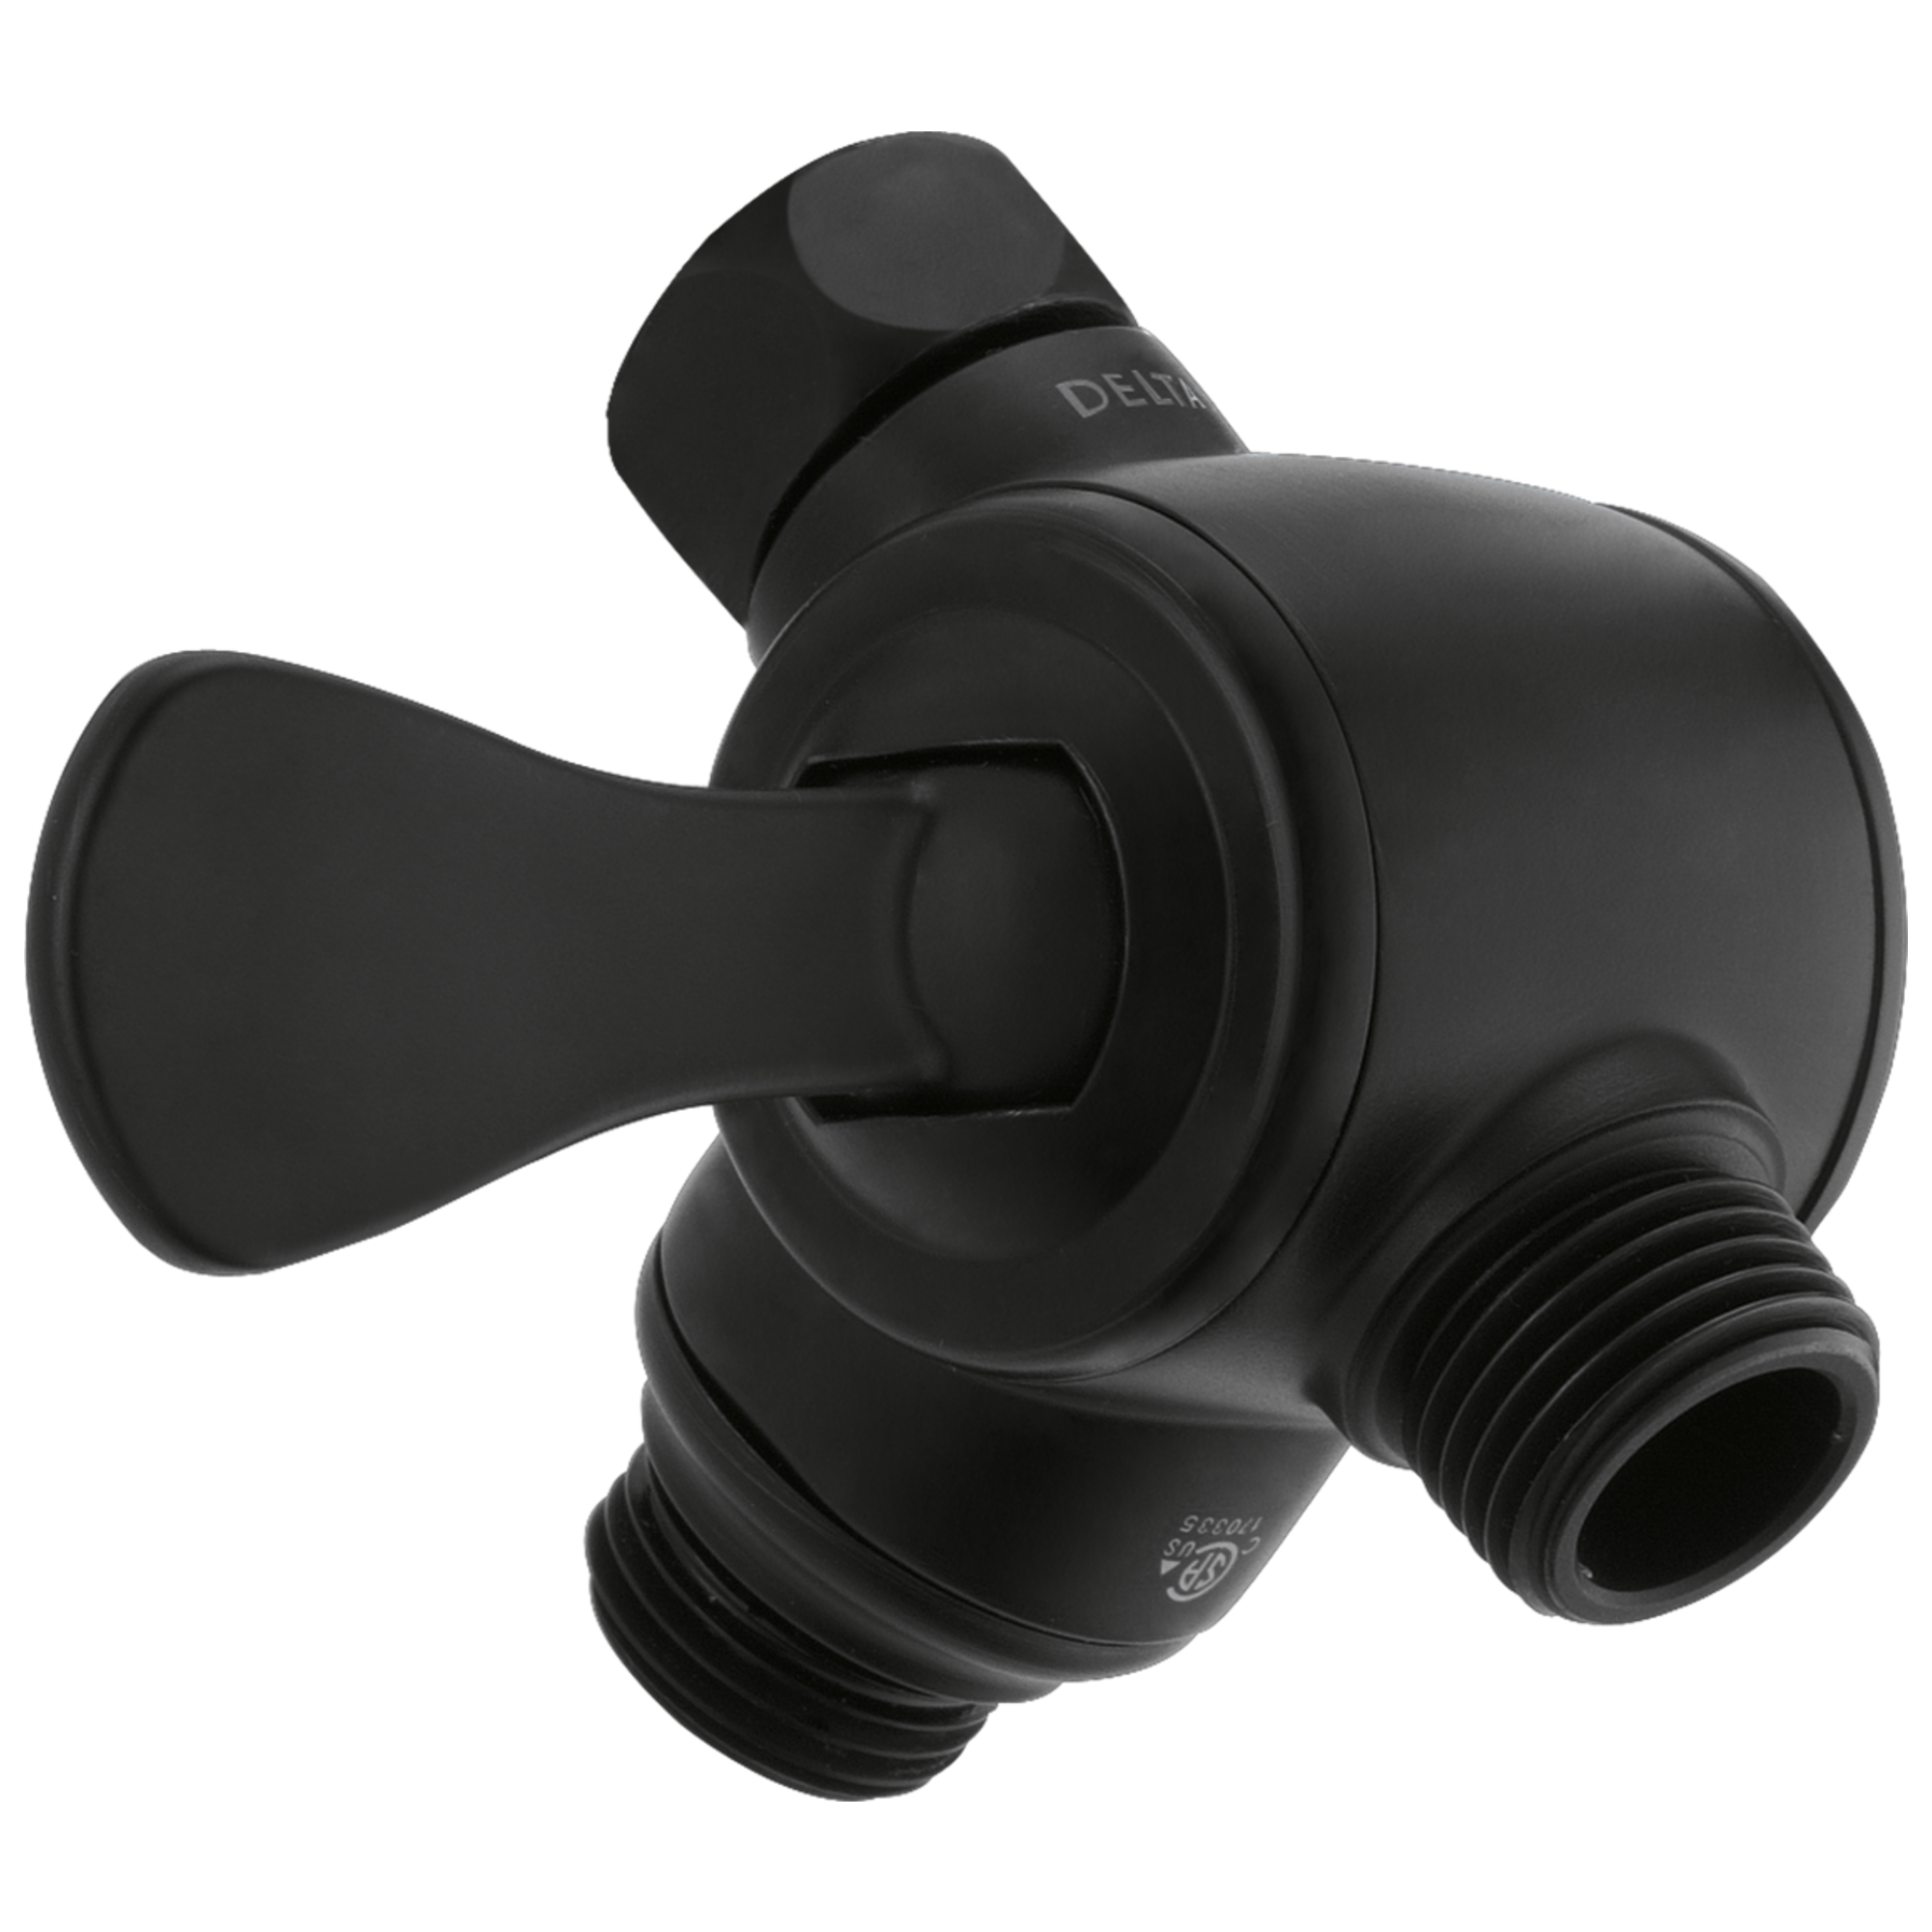 Delta Universal Showering Components: 3-Way Shower Arm Diverter for Hand Shower